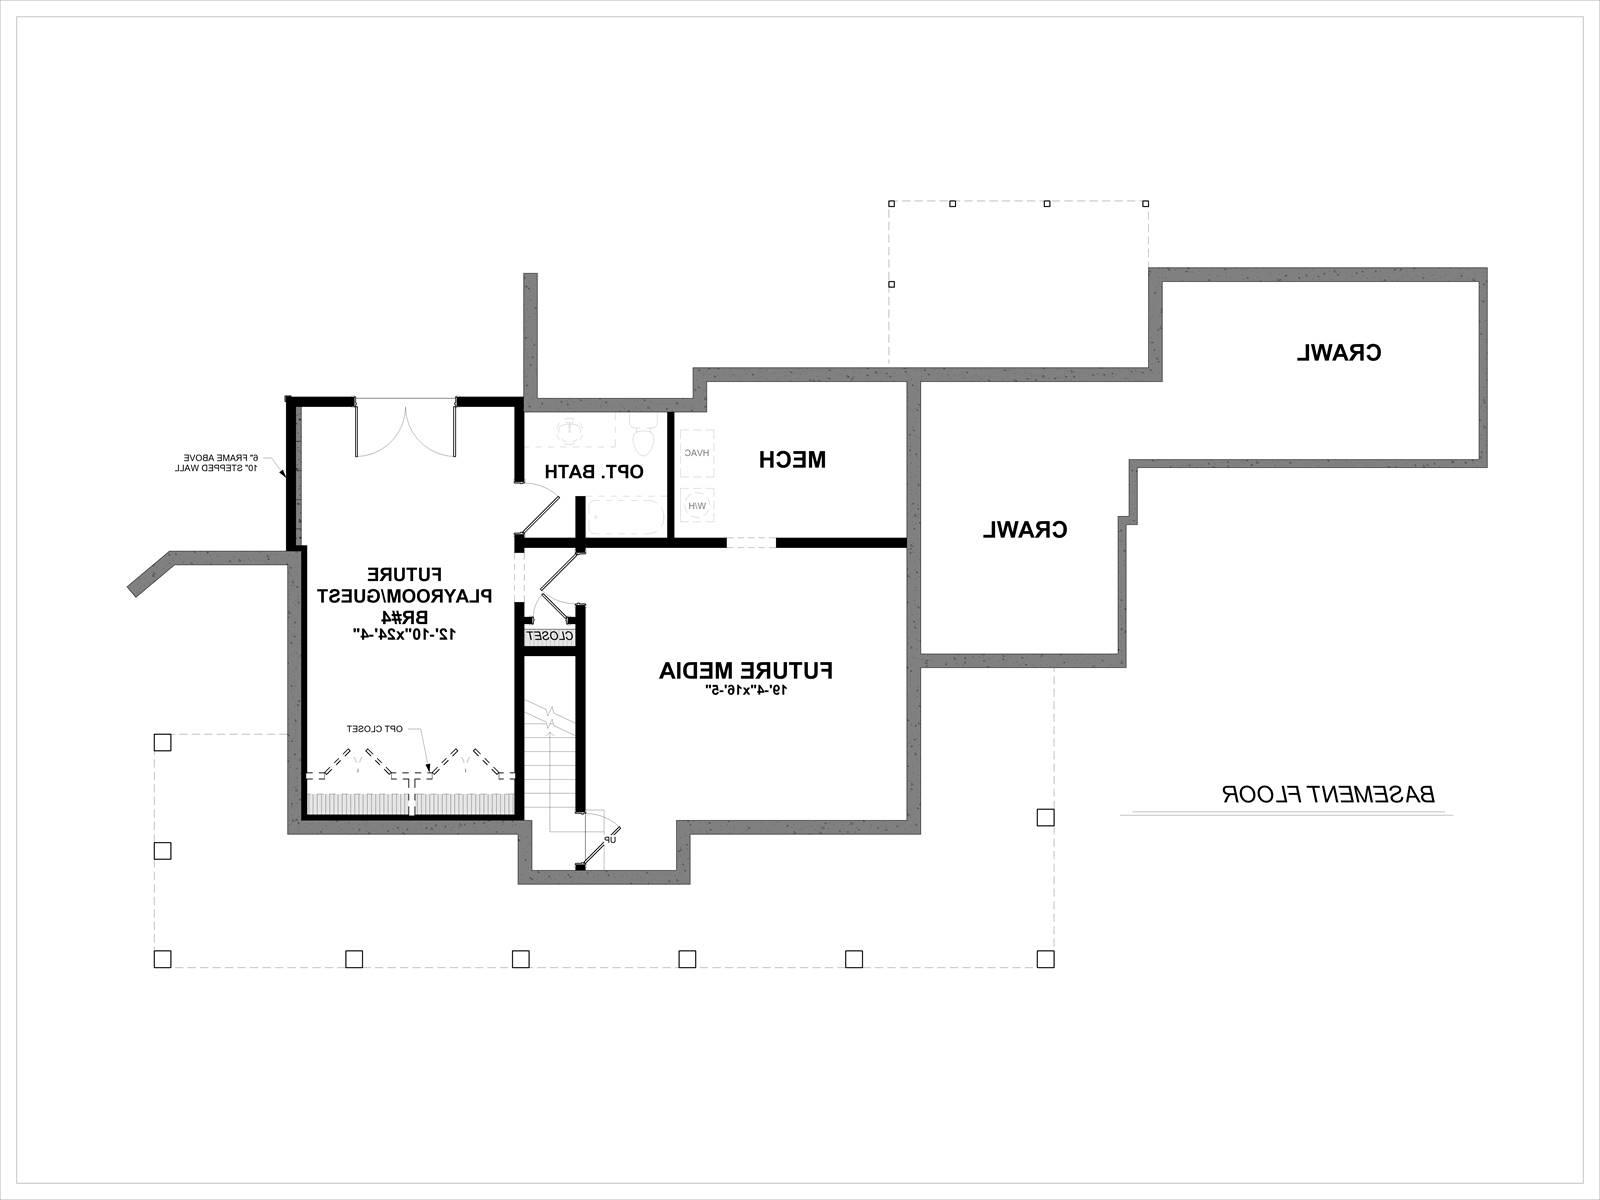 Basement Plan image of Countryfield II House Plan